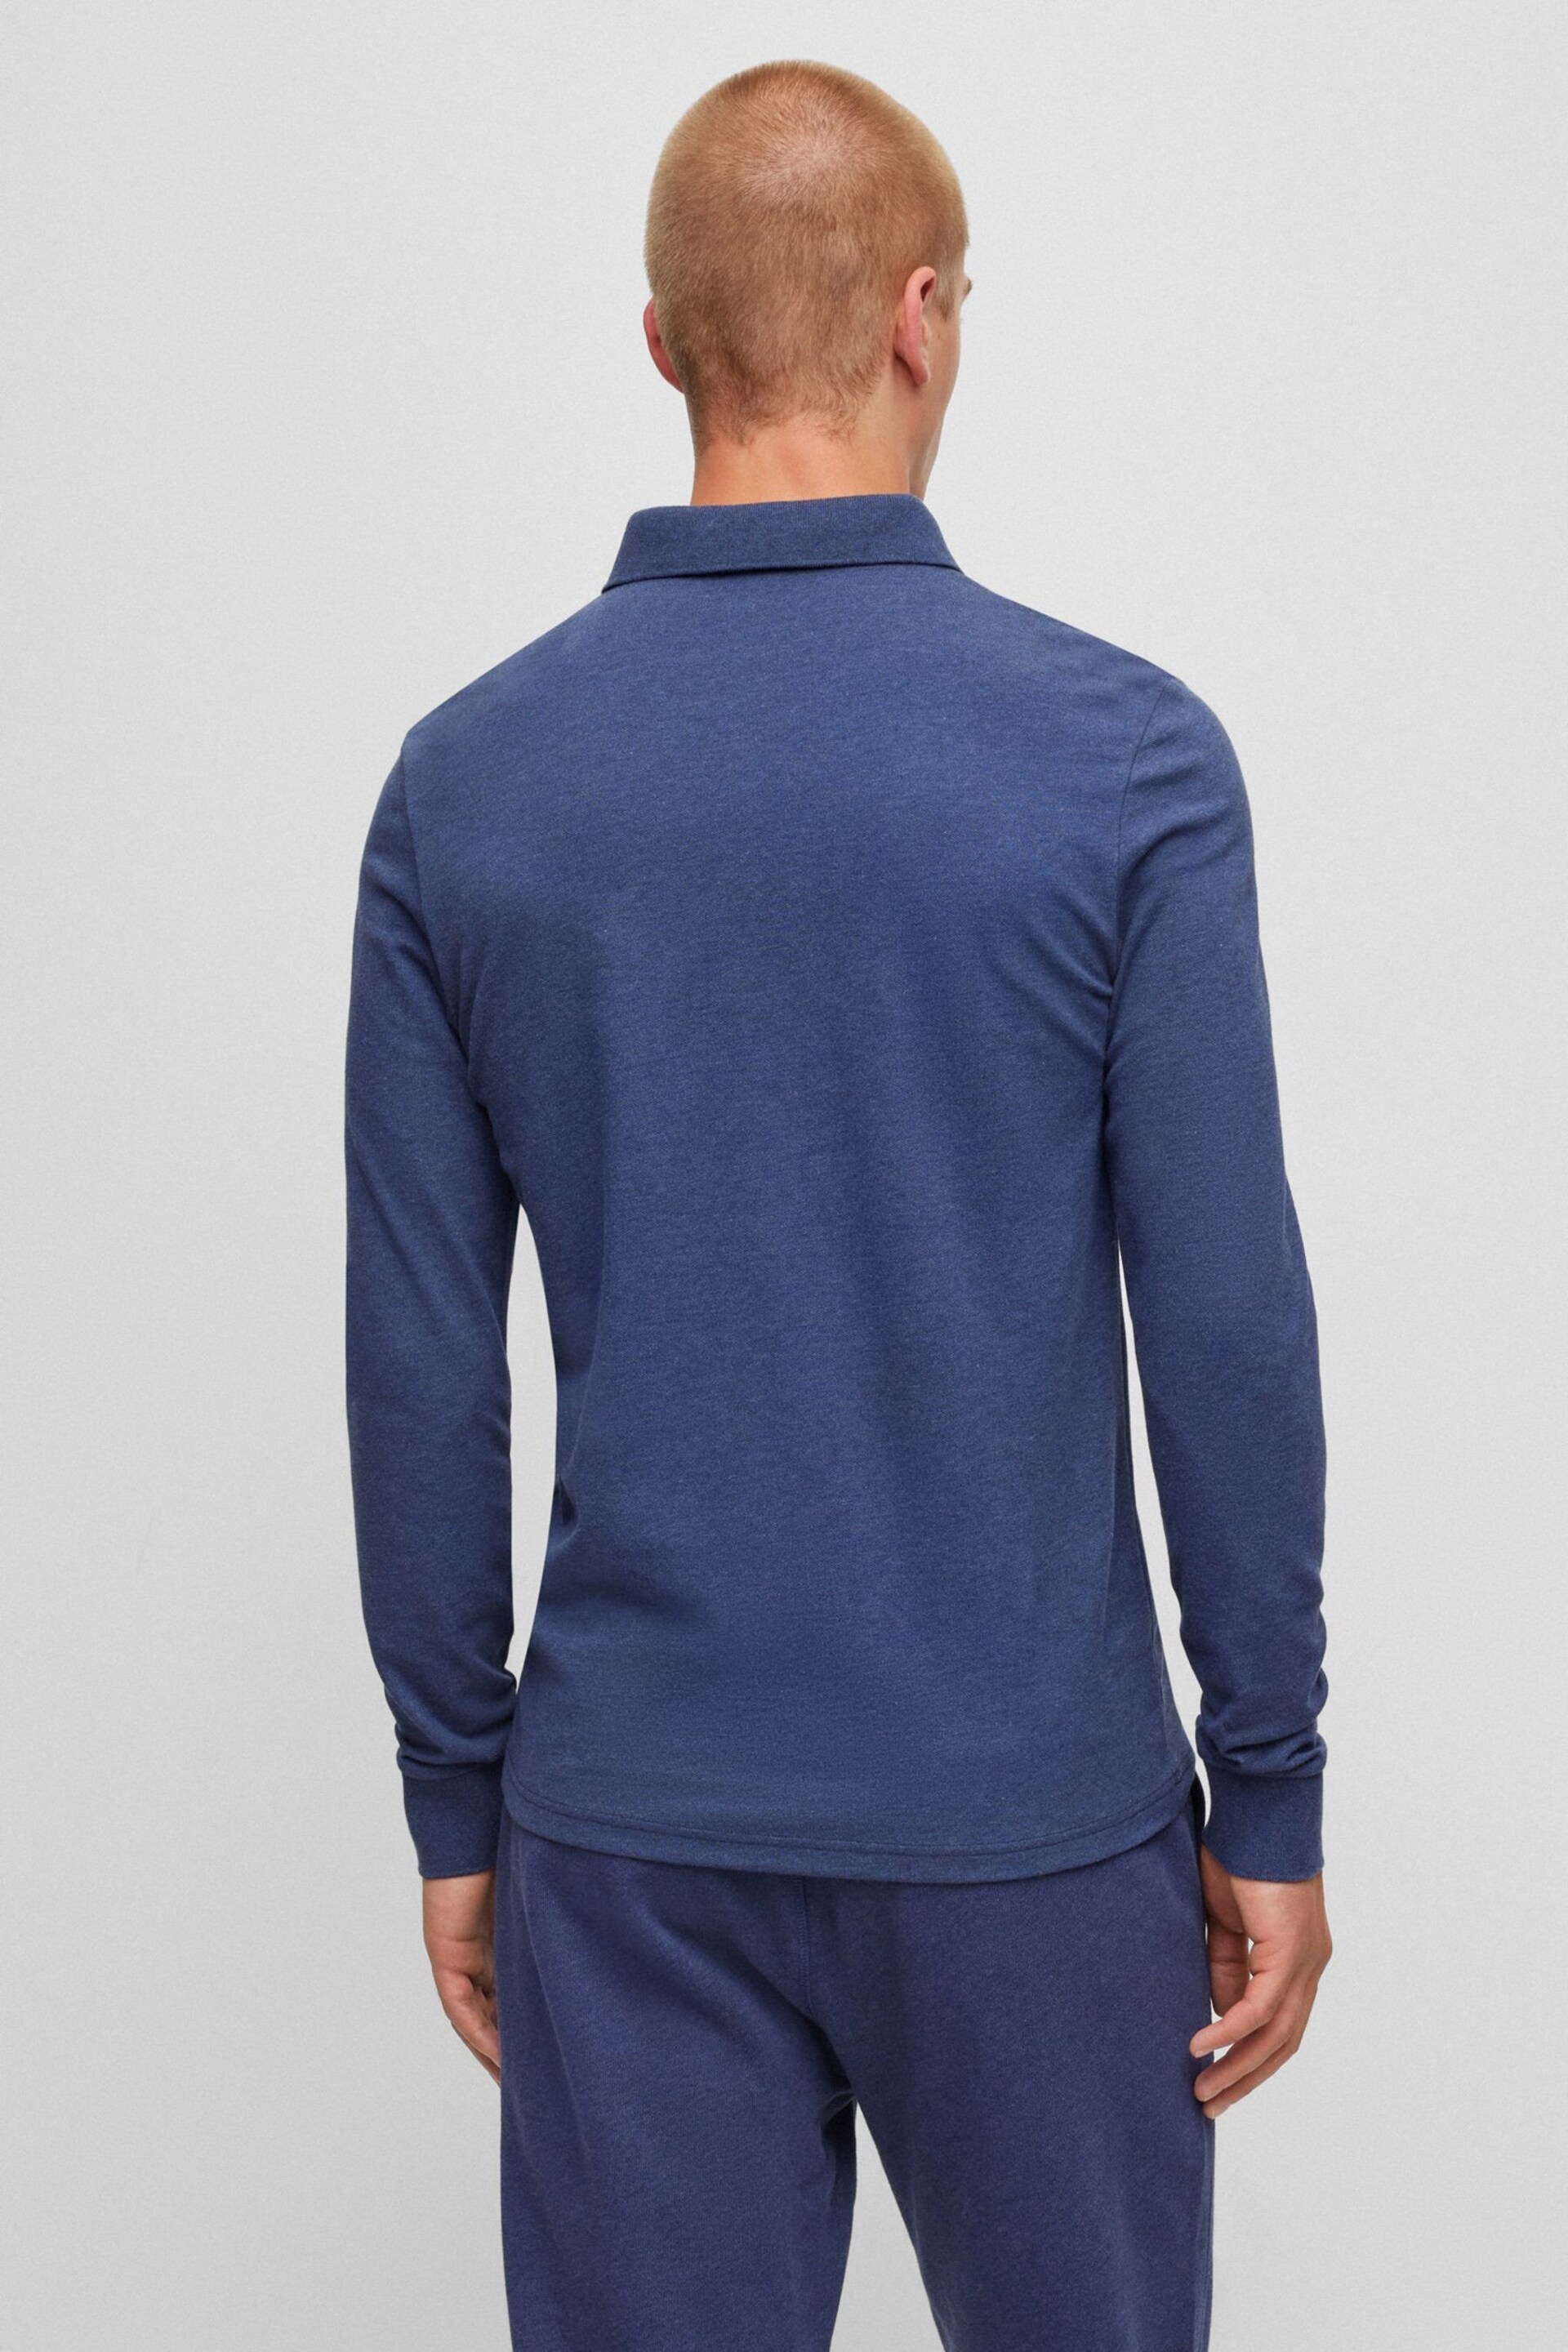 BOSS Dark Navy Blue Passerby Polo Shirt - Image 2 of 5